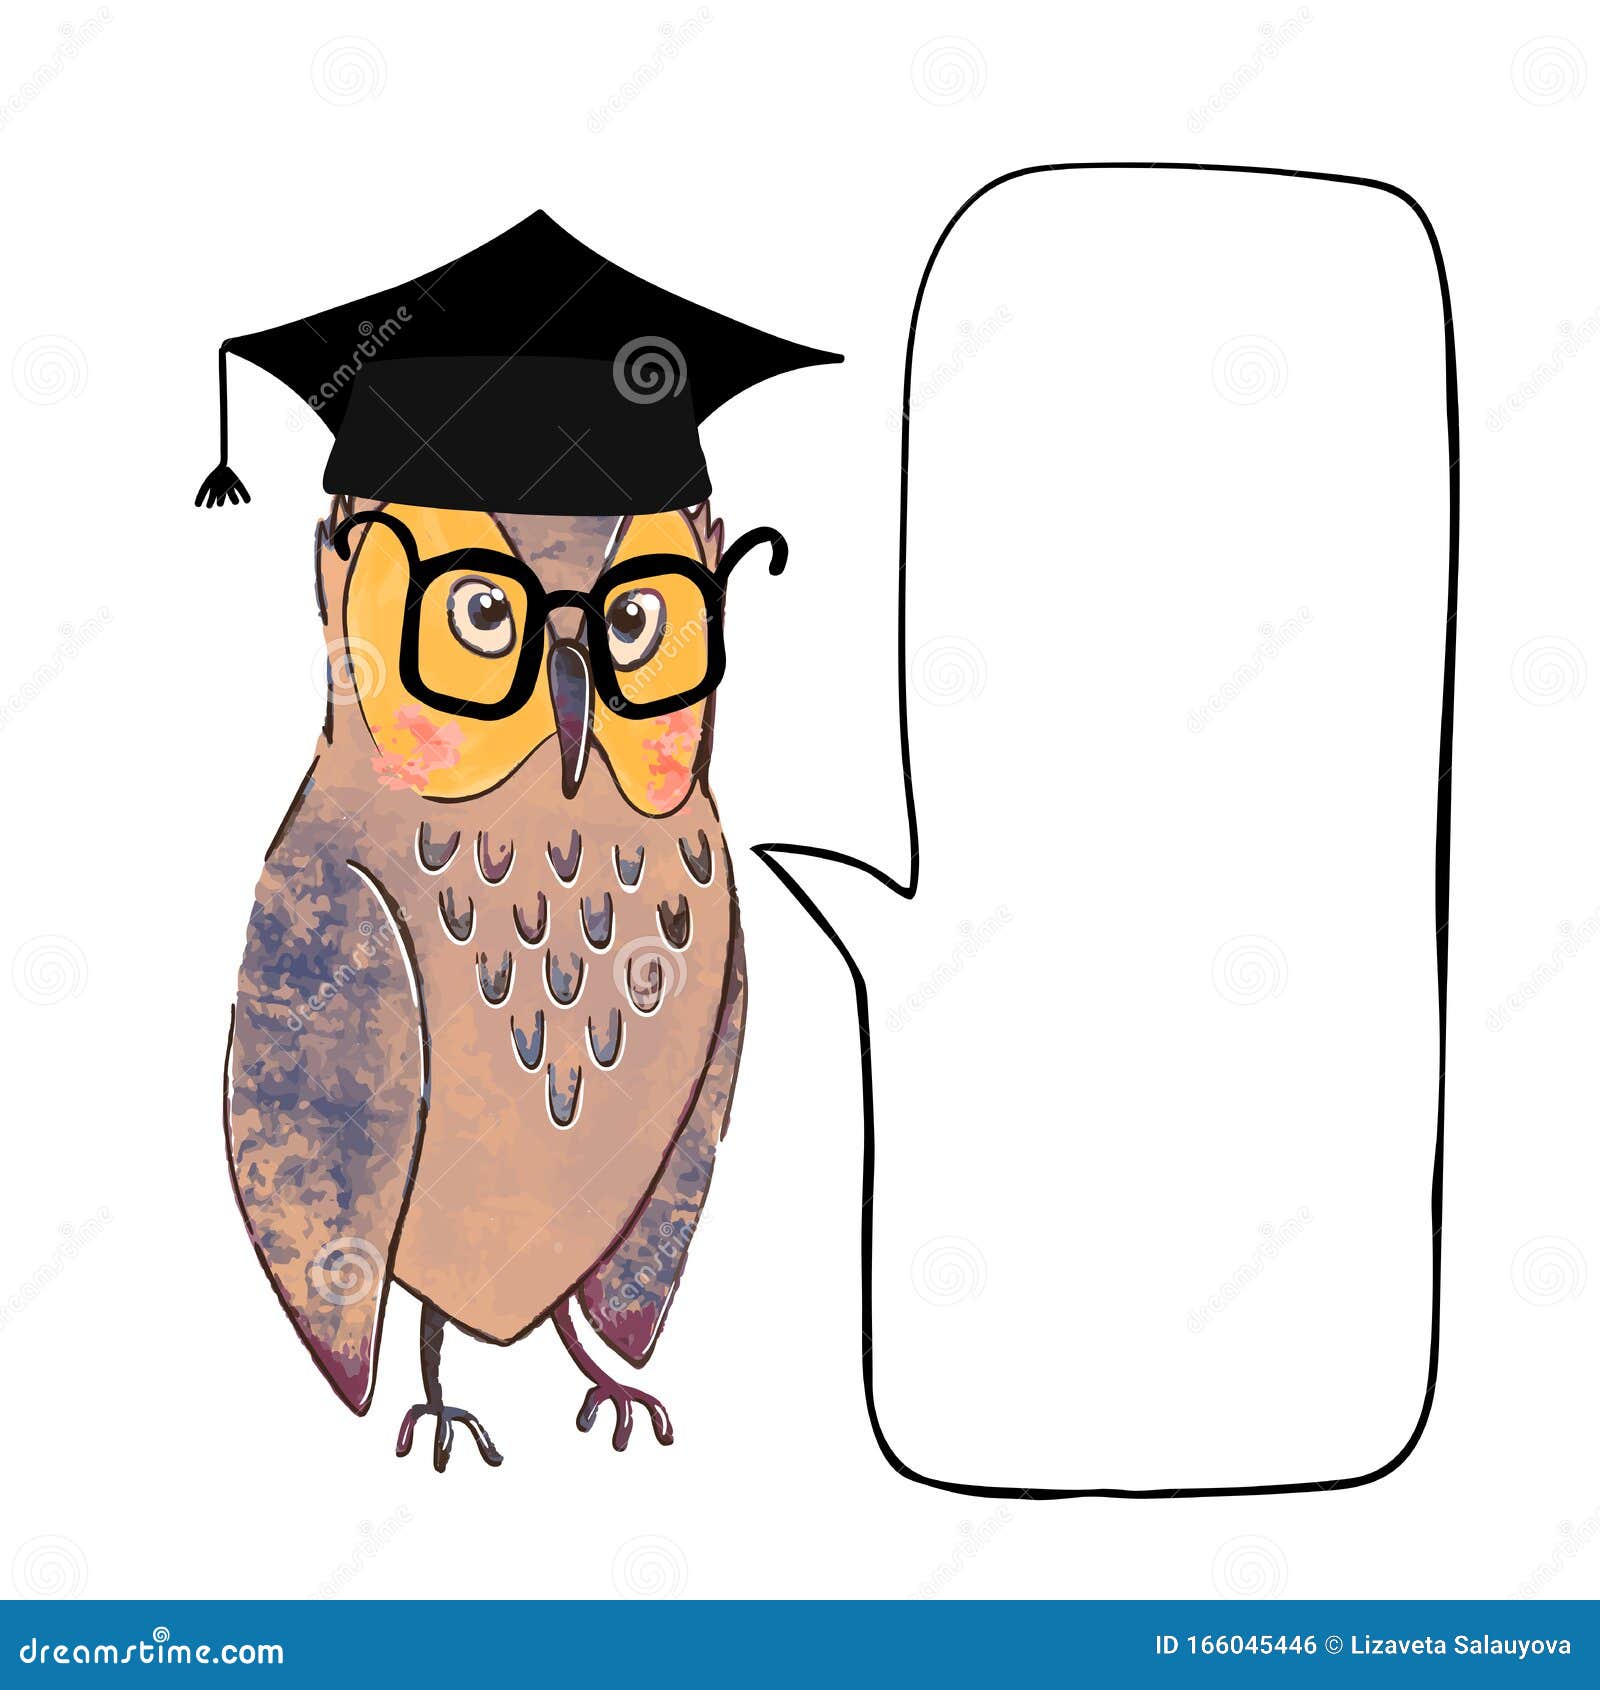 wise owl in graduate cap and speach buble